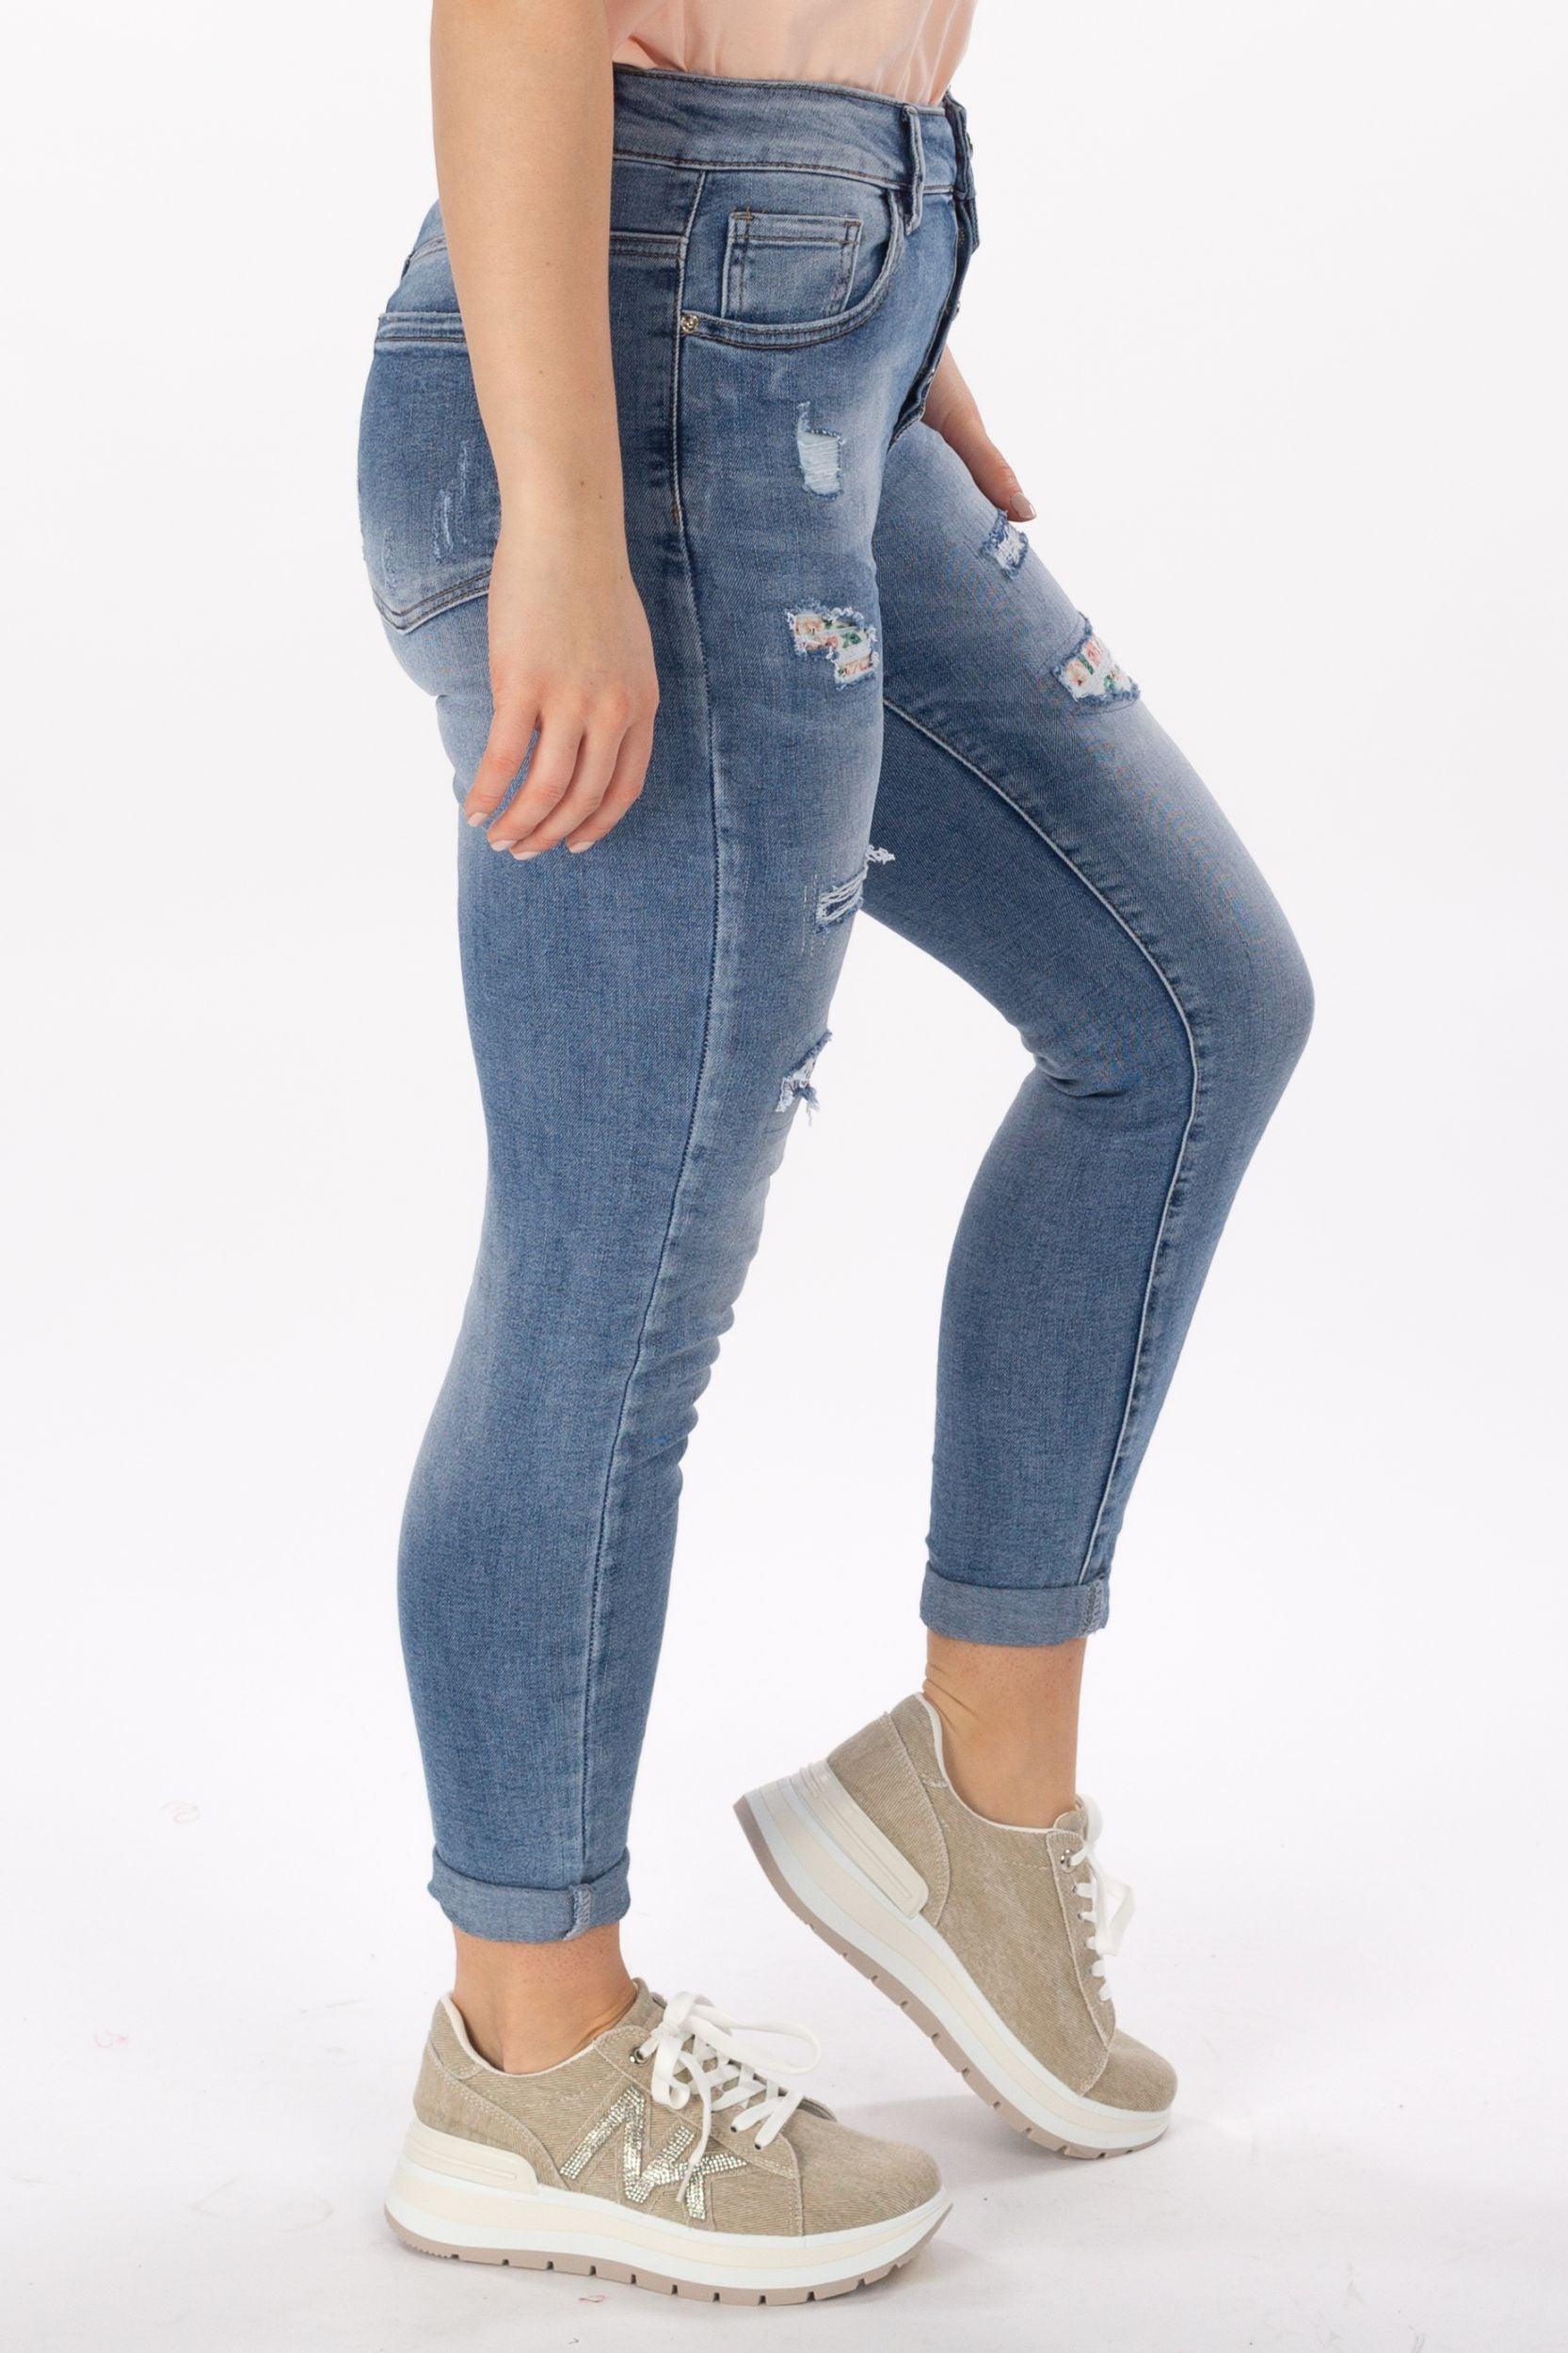 Destroyed Jeans im Crinkle Look - La Strada